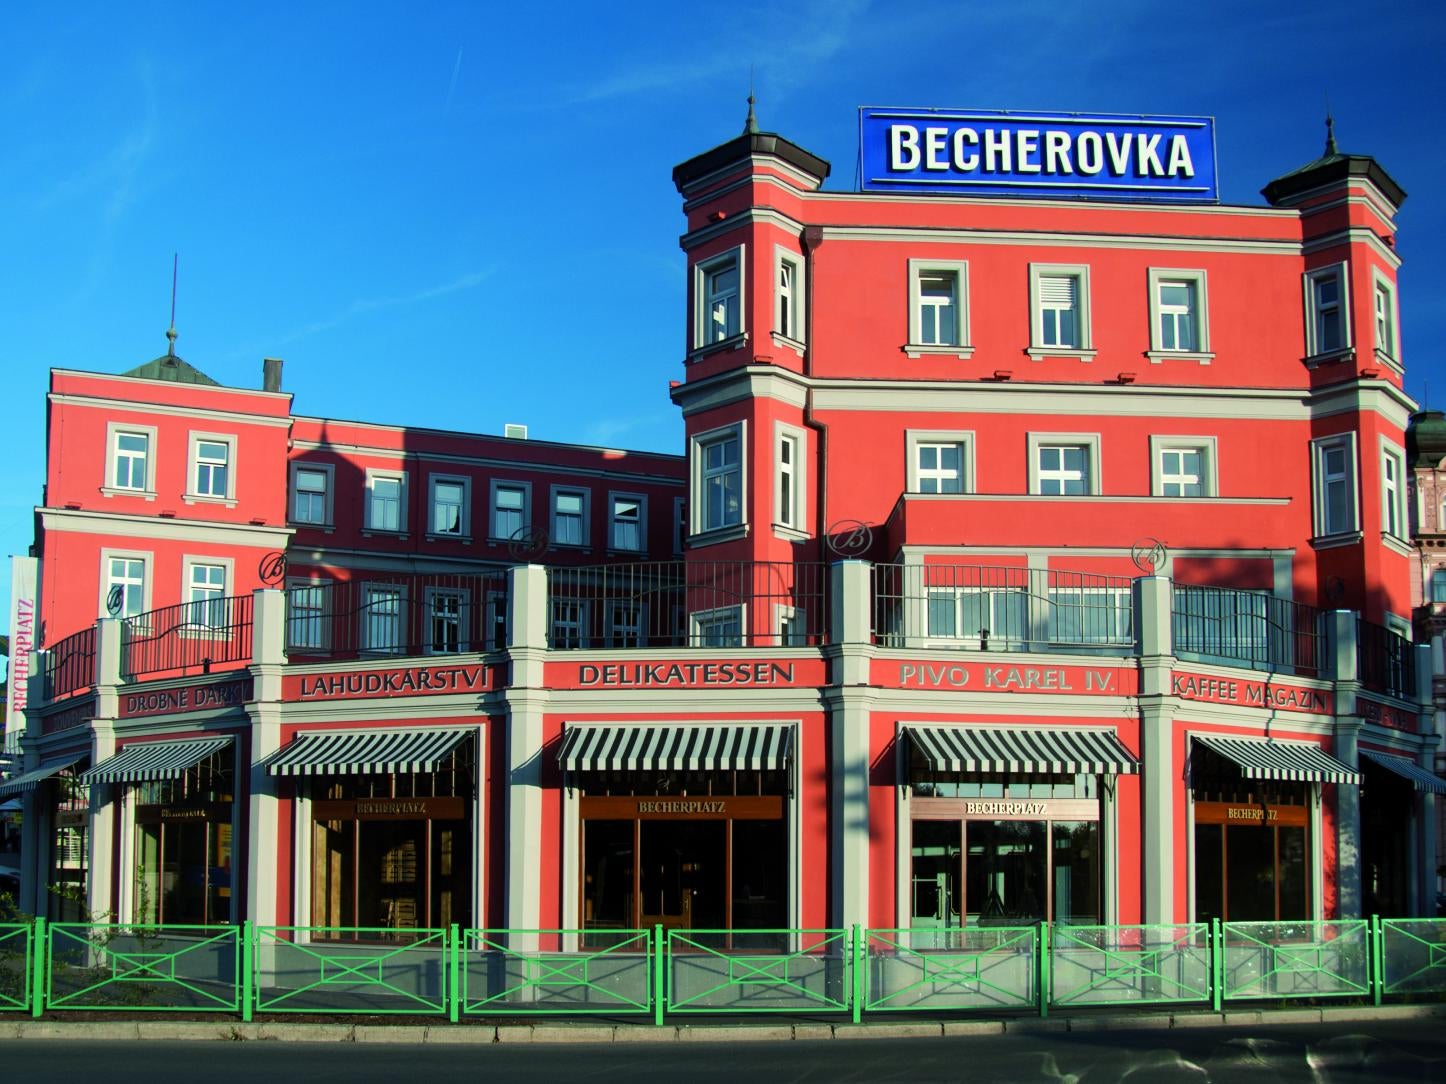 Becherovka Visitor's Centre